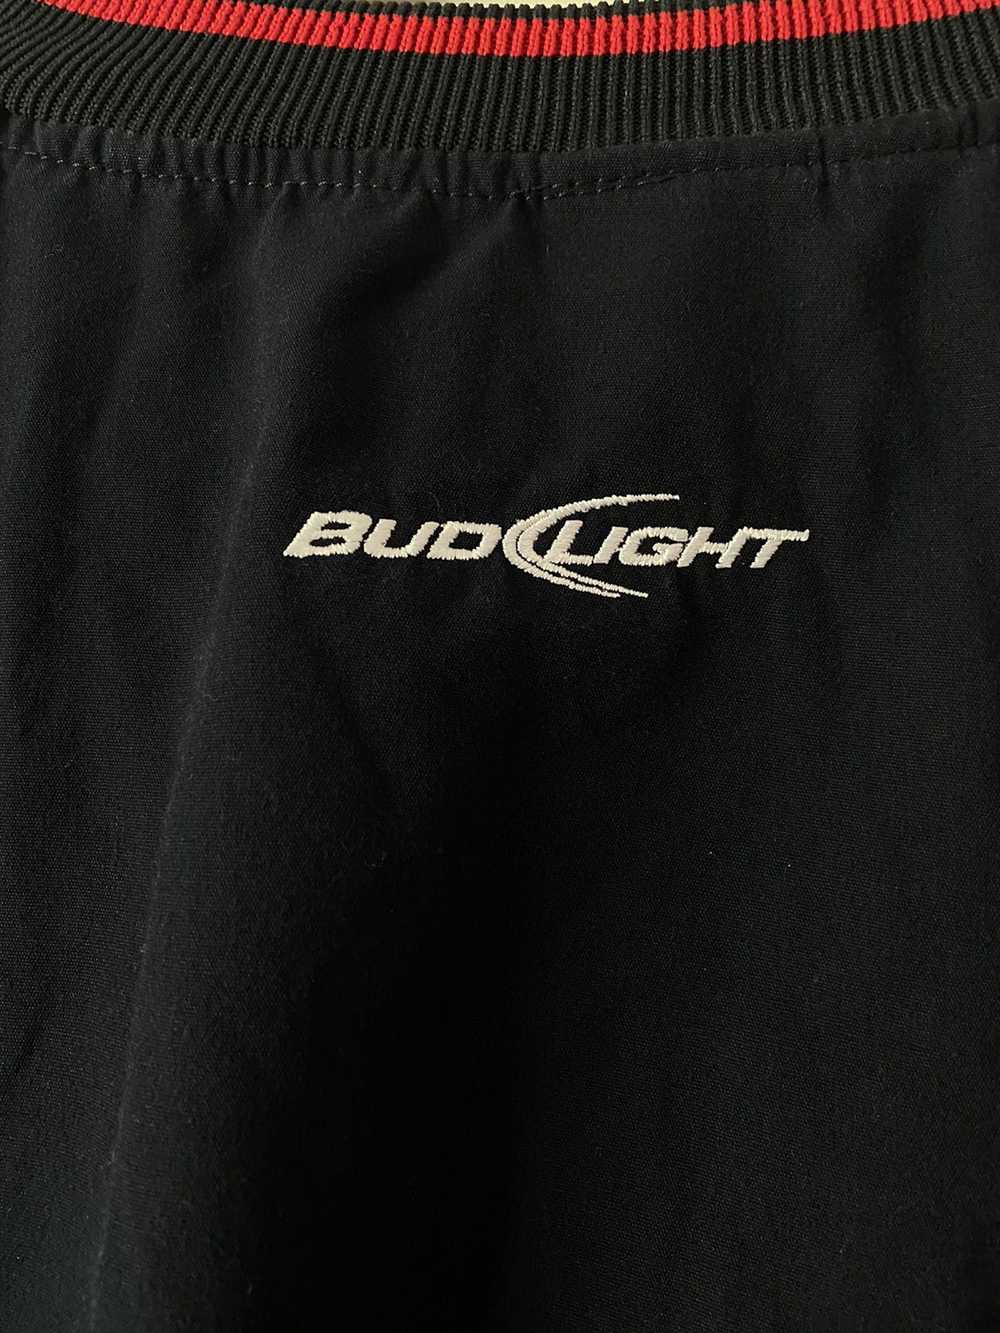 Budweiser Vintage Budweiser Pullover 90s - image 5